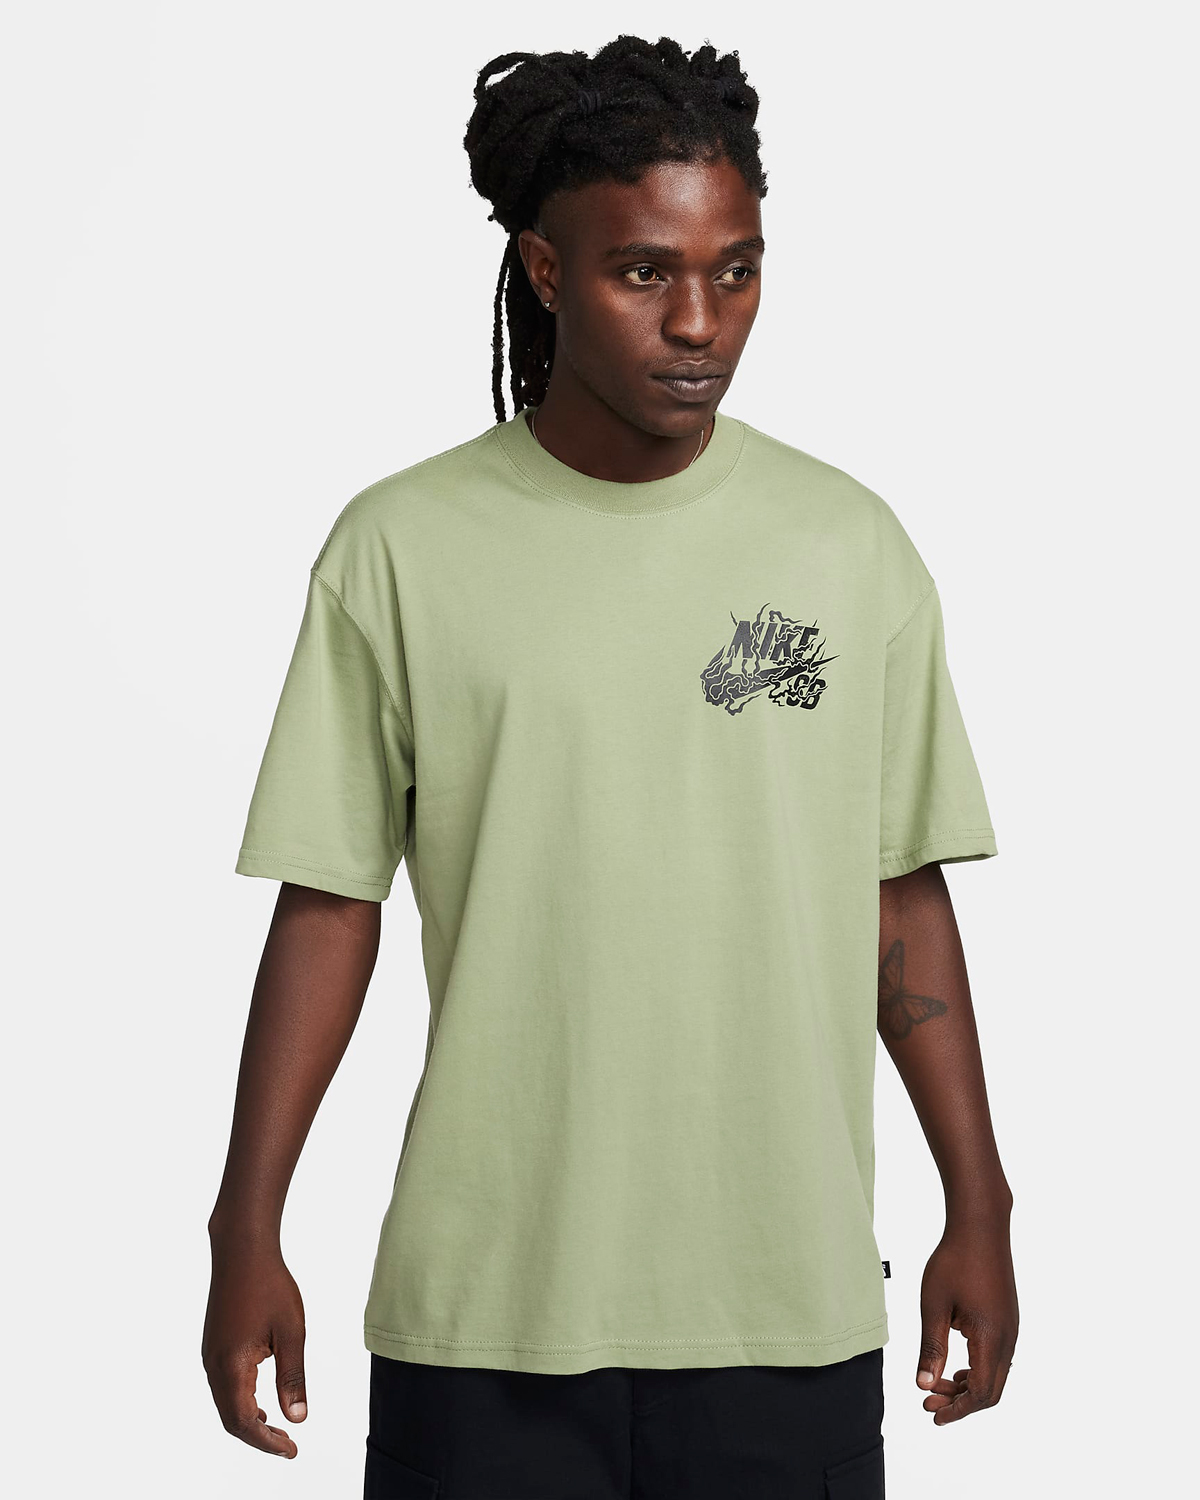 Nike-SB-T-Shirt-Oil-Green-1